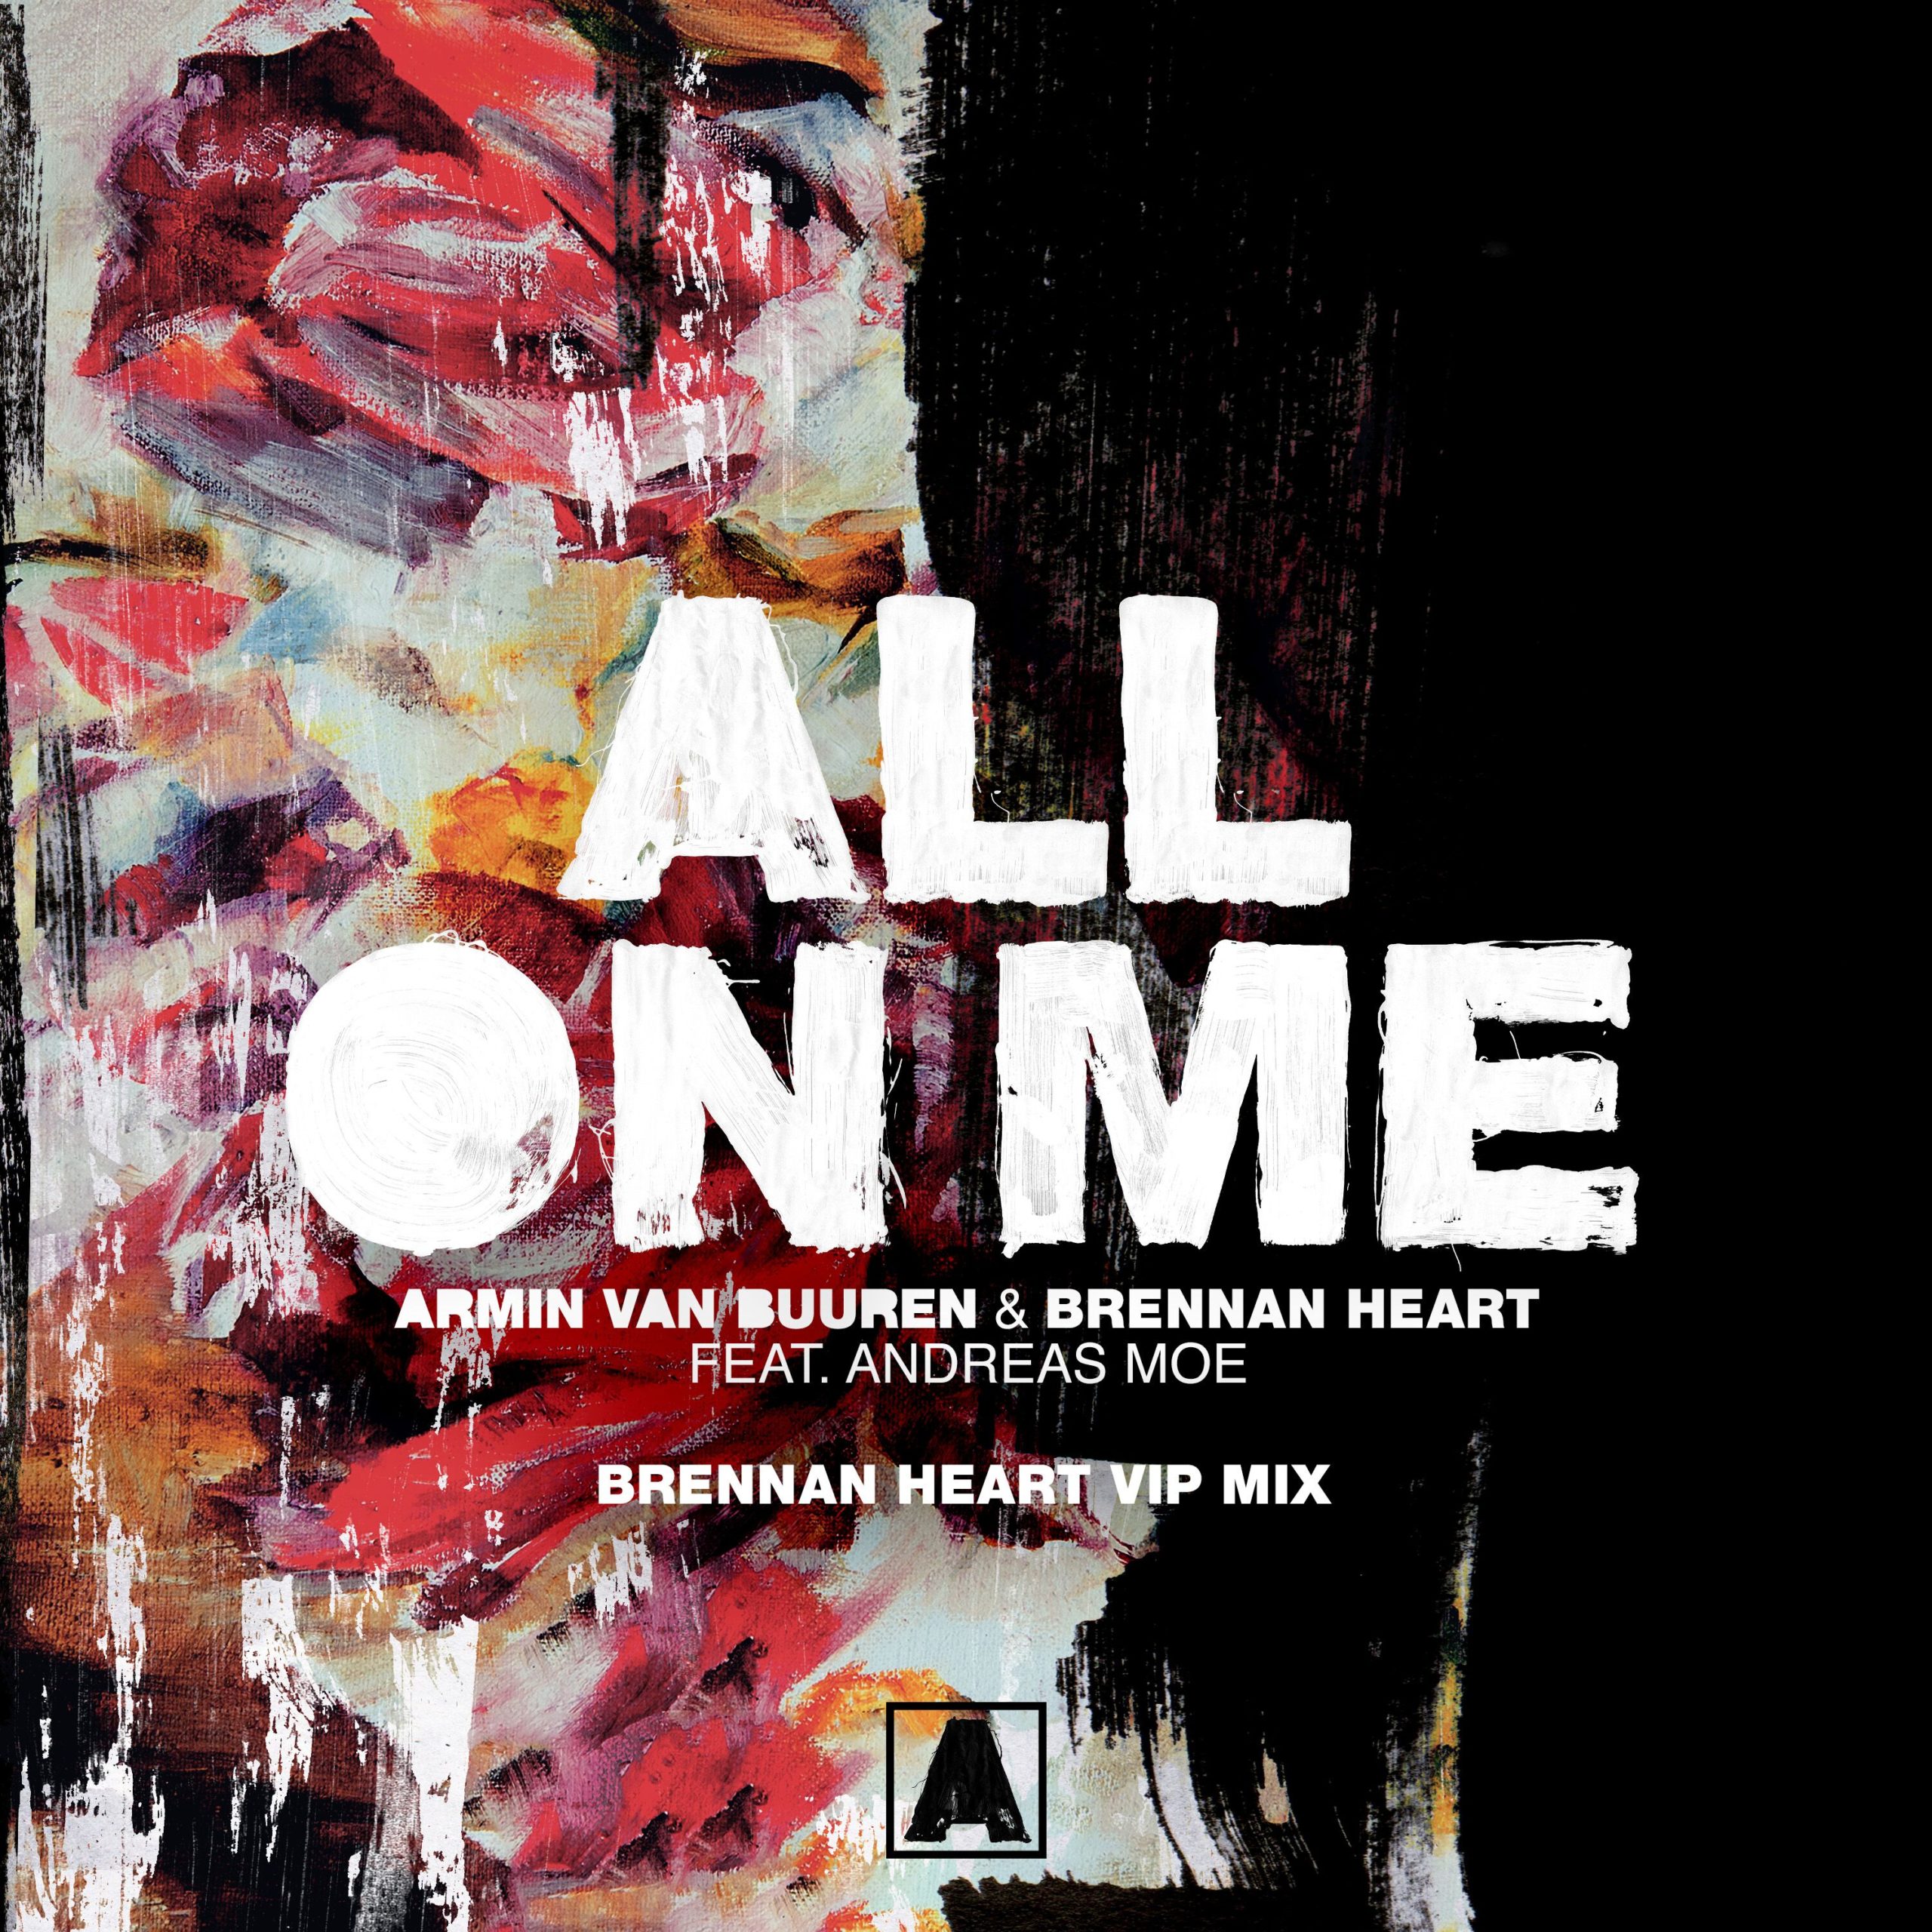 Armin van Buuren and Brennan Heart feat. Andreas Moe presents All On Me (Brennan Heart VIP Mix) on Armada Music